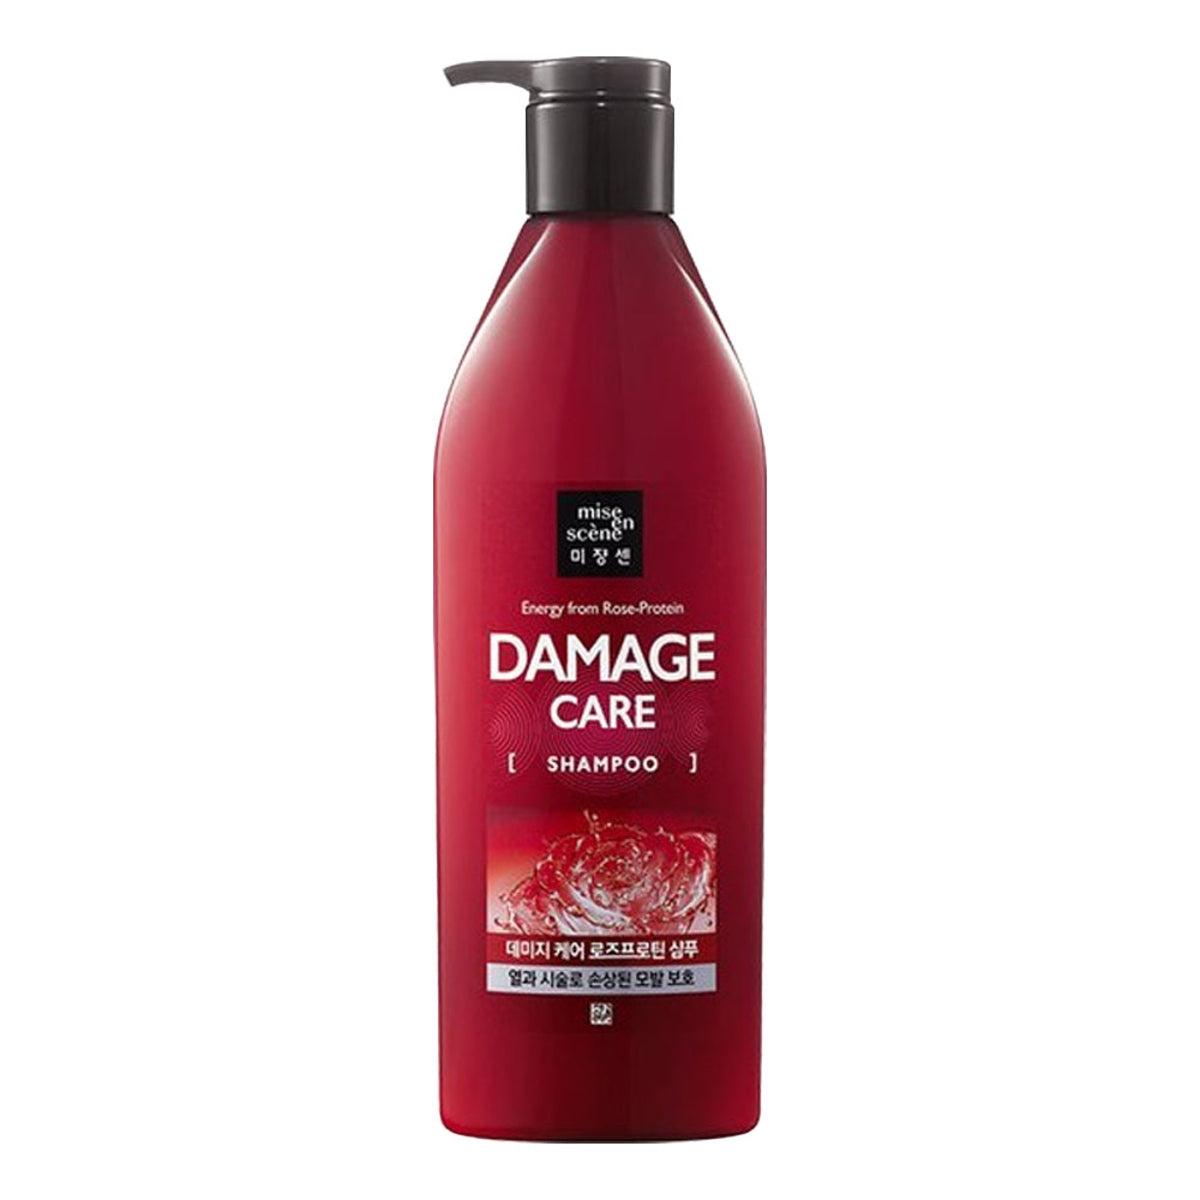 Damage Care Rose-Protein Shampoo